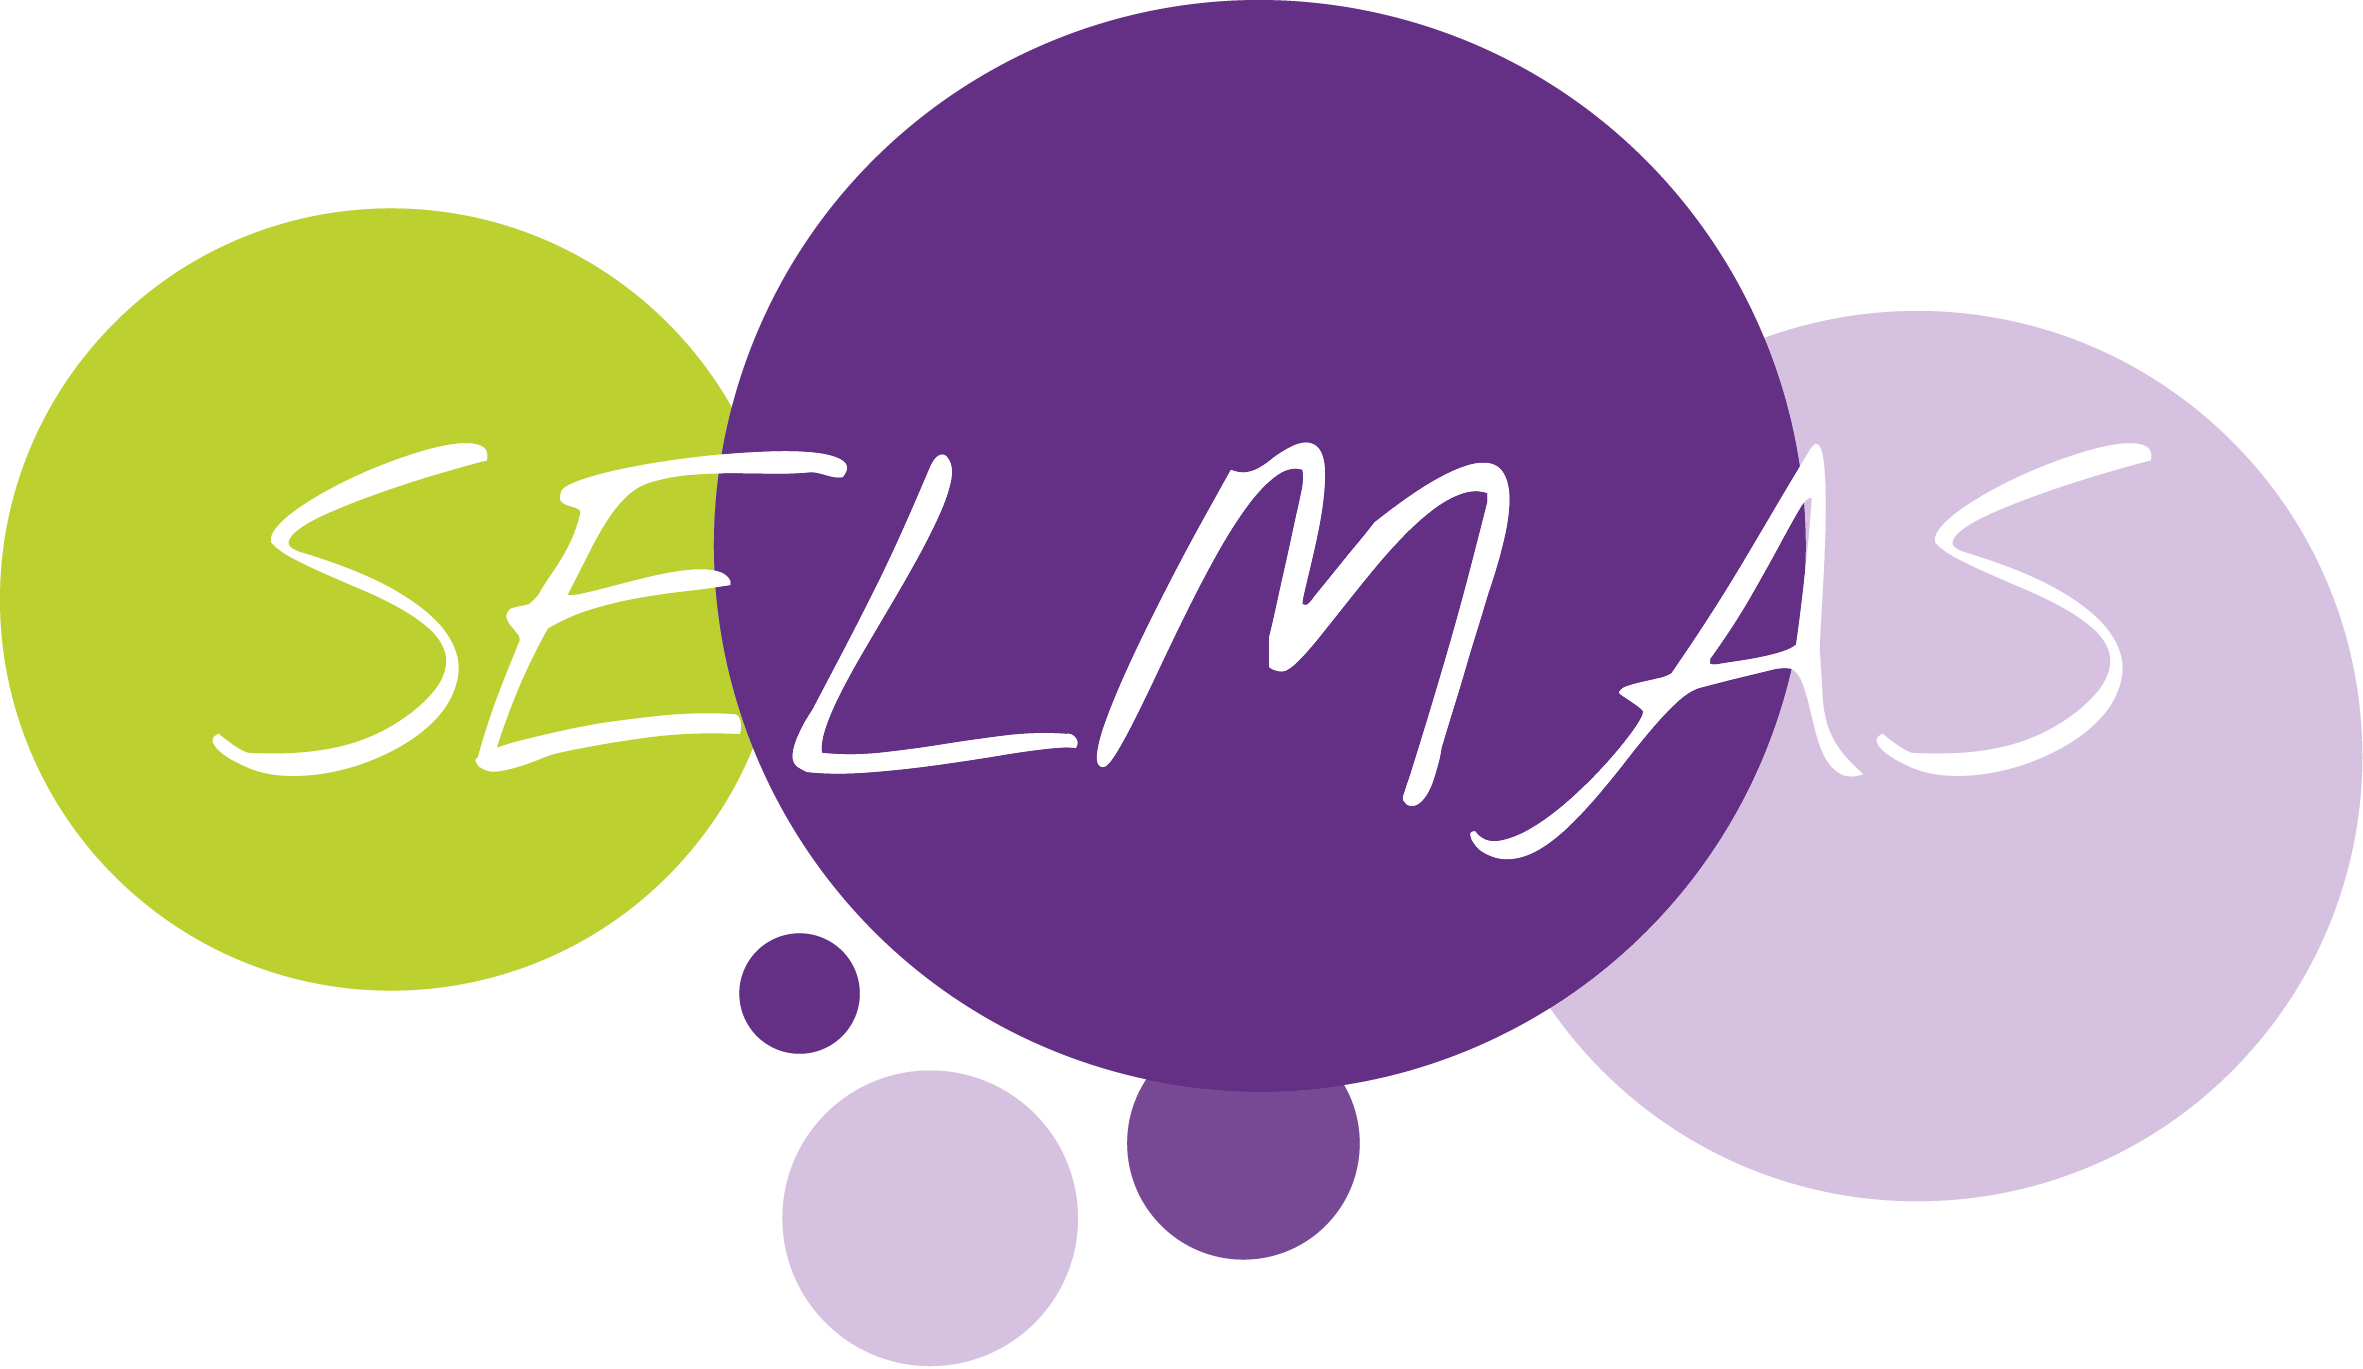 SELMAS Logo